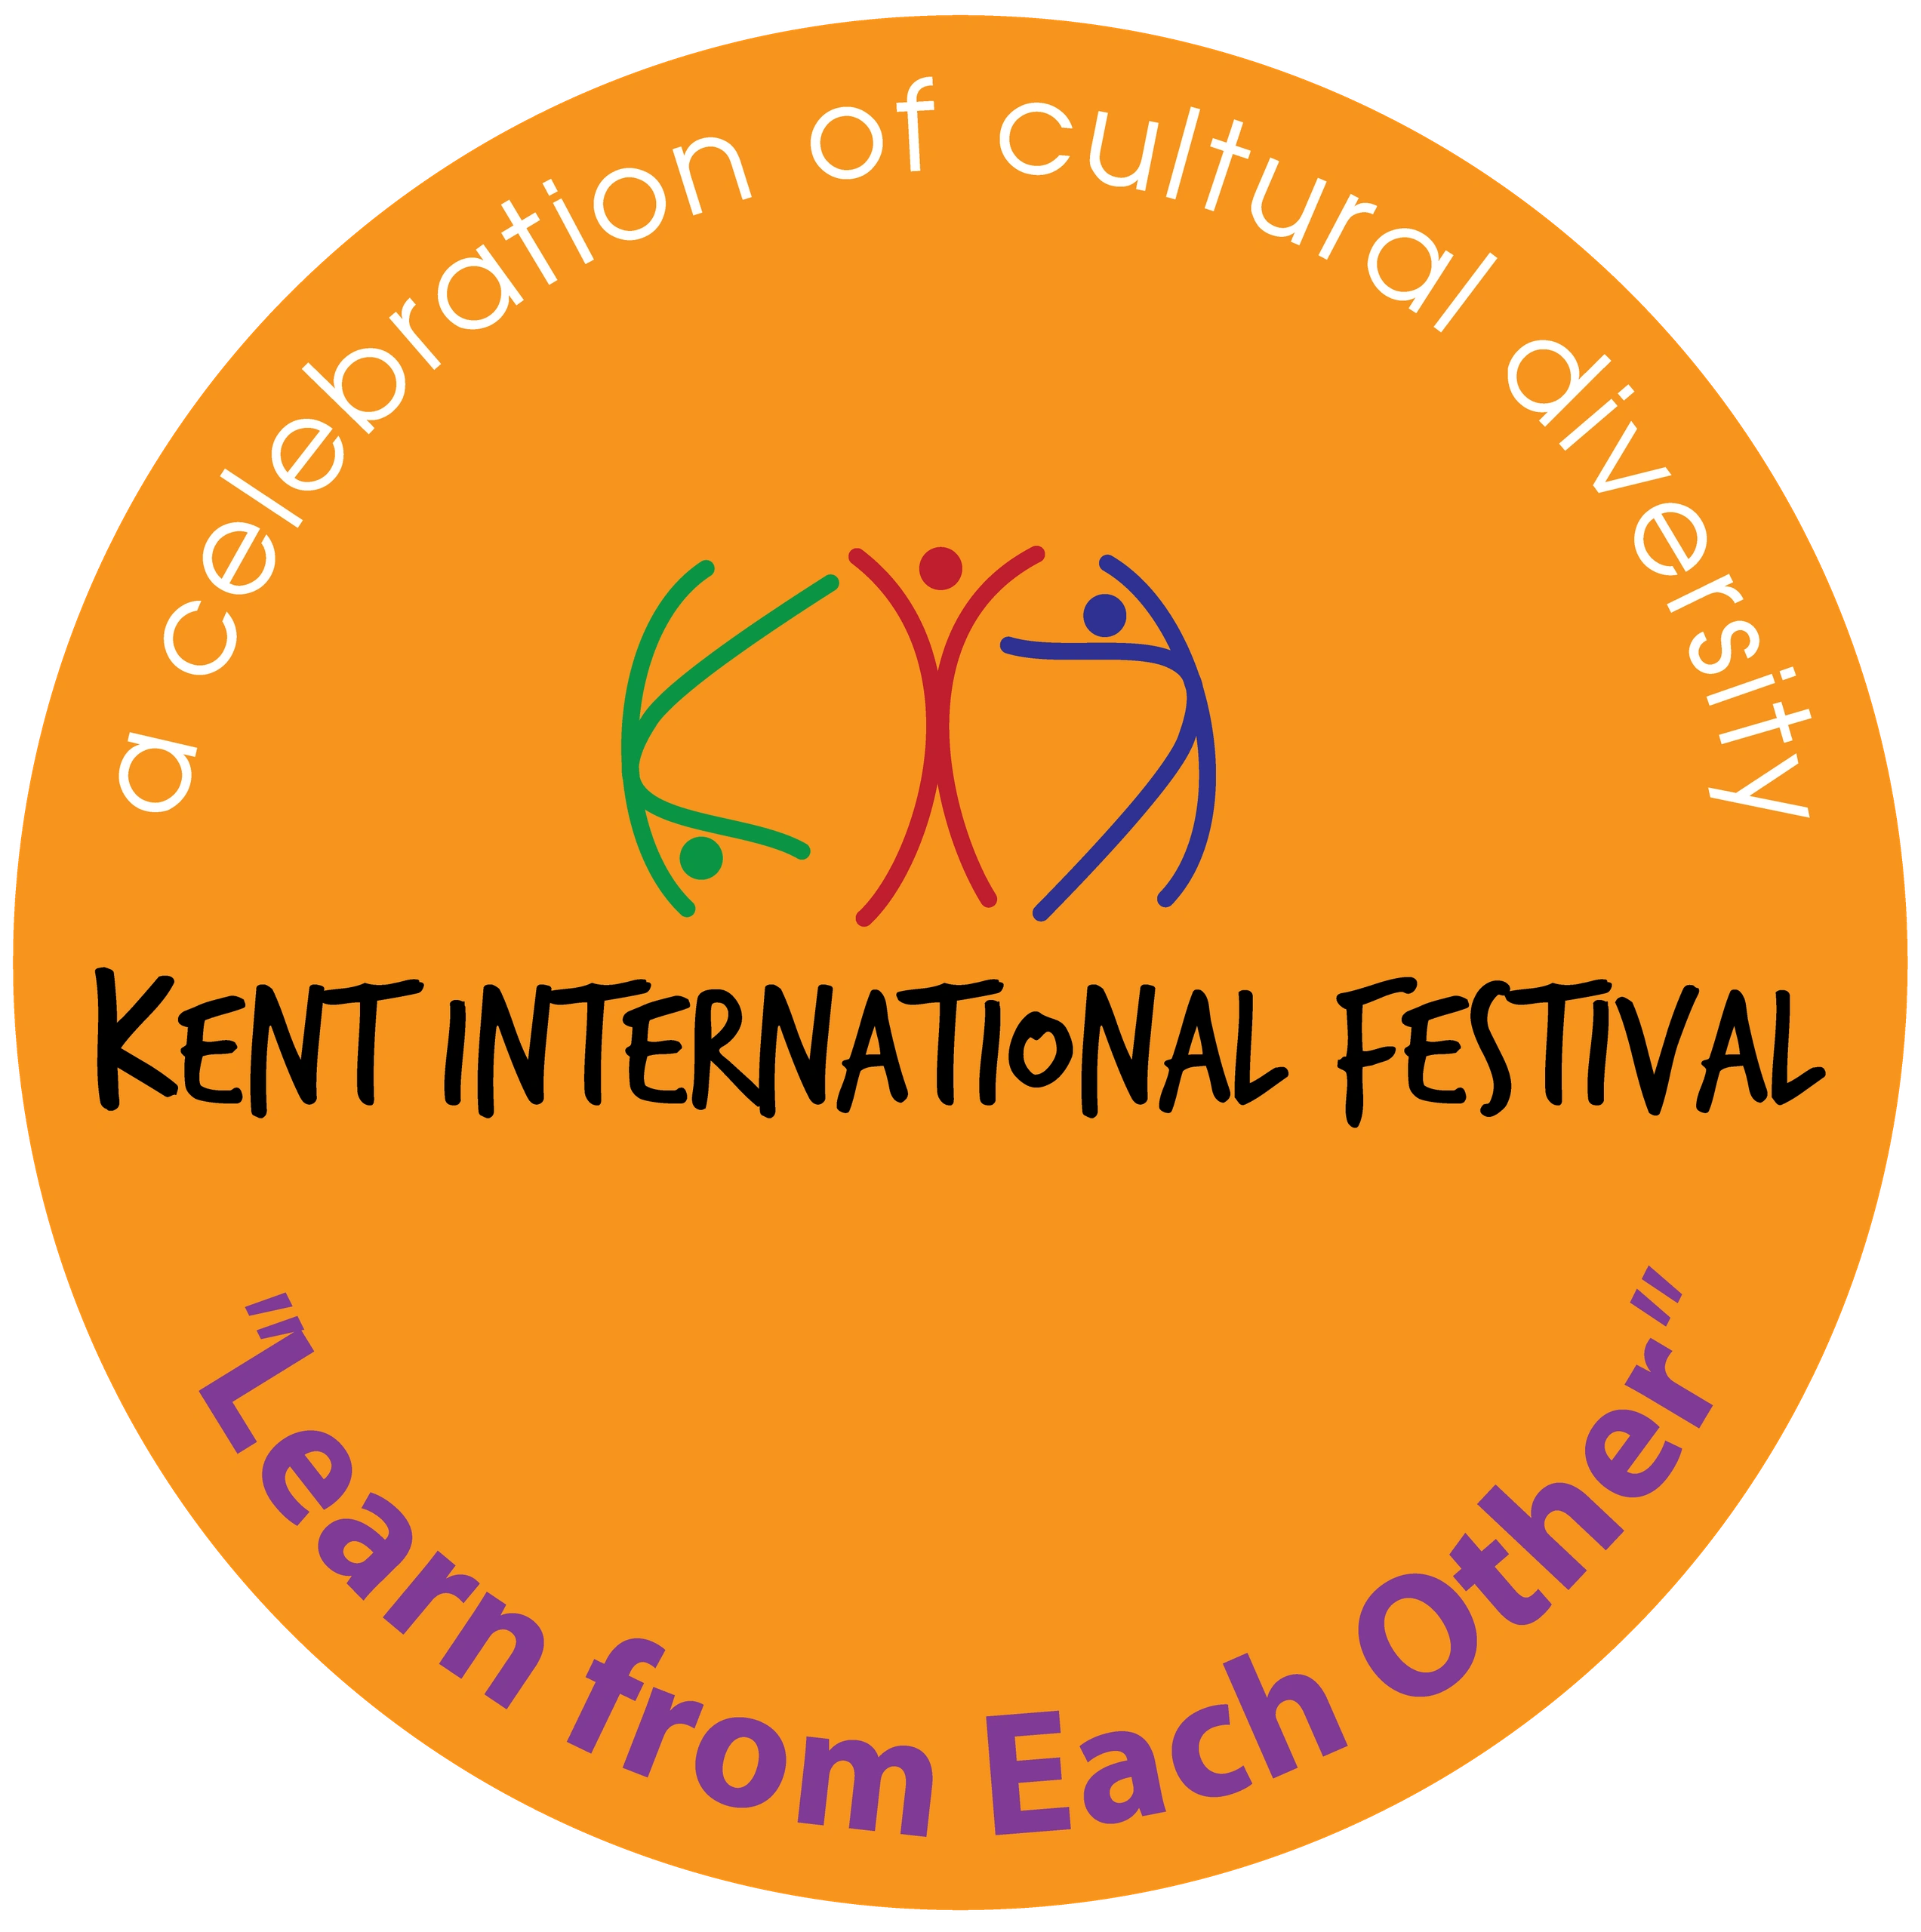 Kent International Festival - International Festival, Multicultural